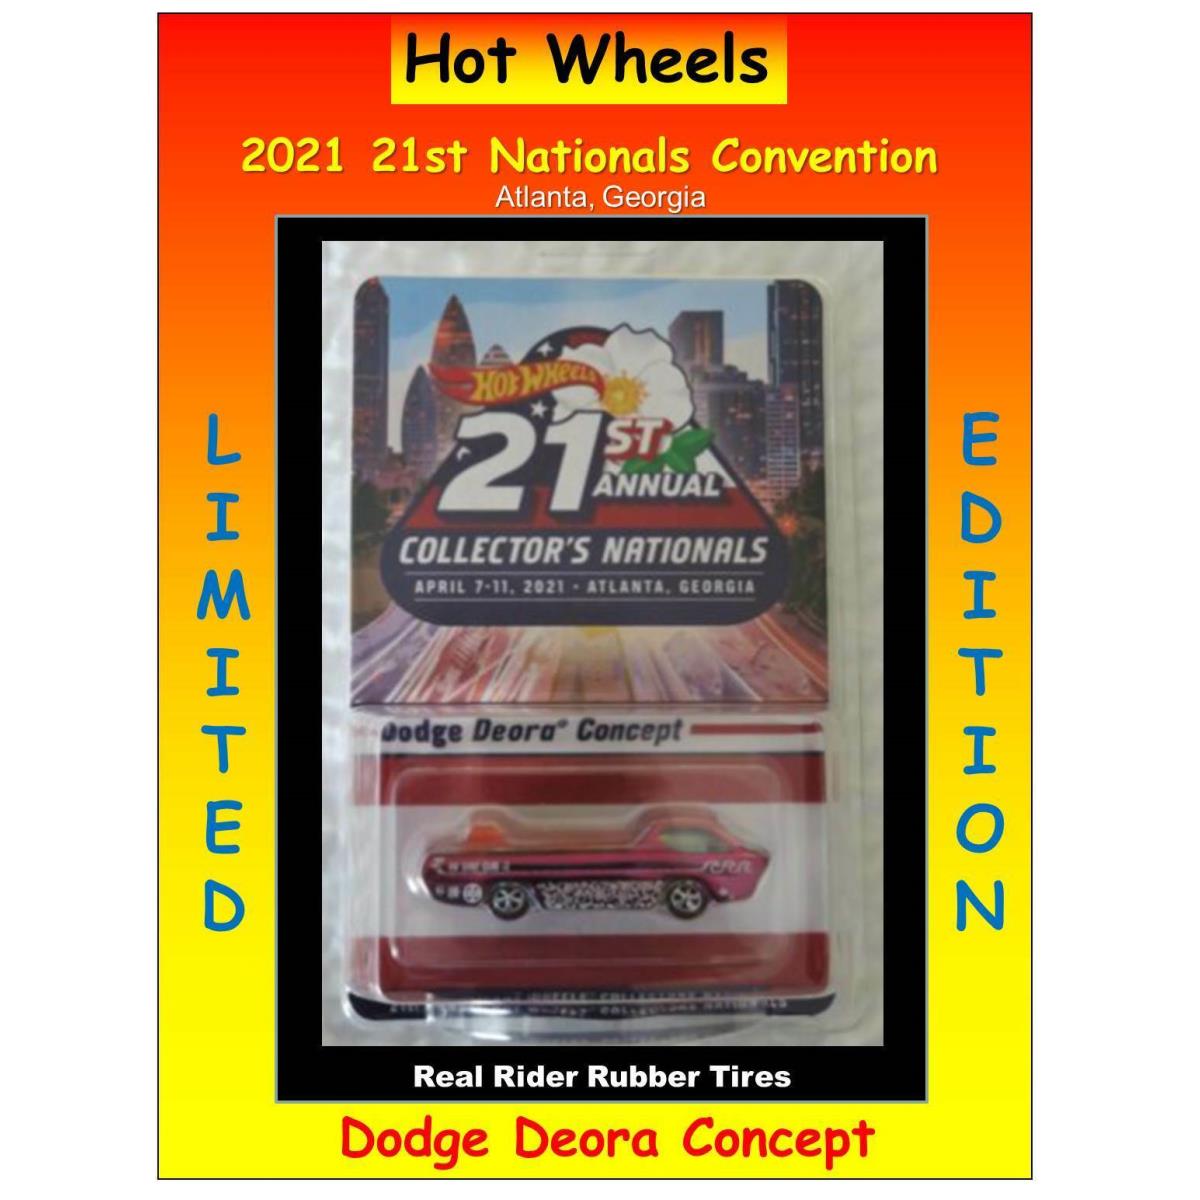 2021 Hot Wheels 21st National Convention Atlanta Leeway Dinner Dodge Deora Pink